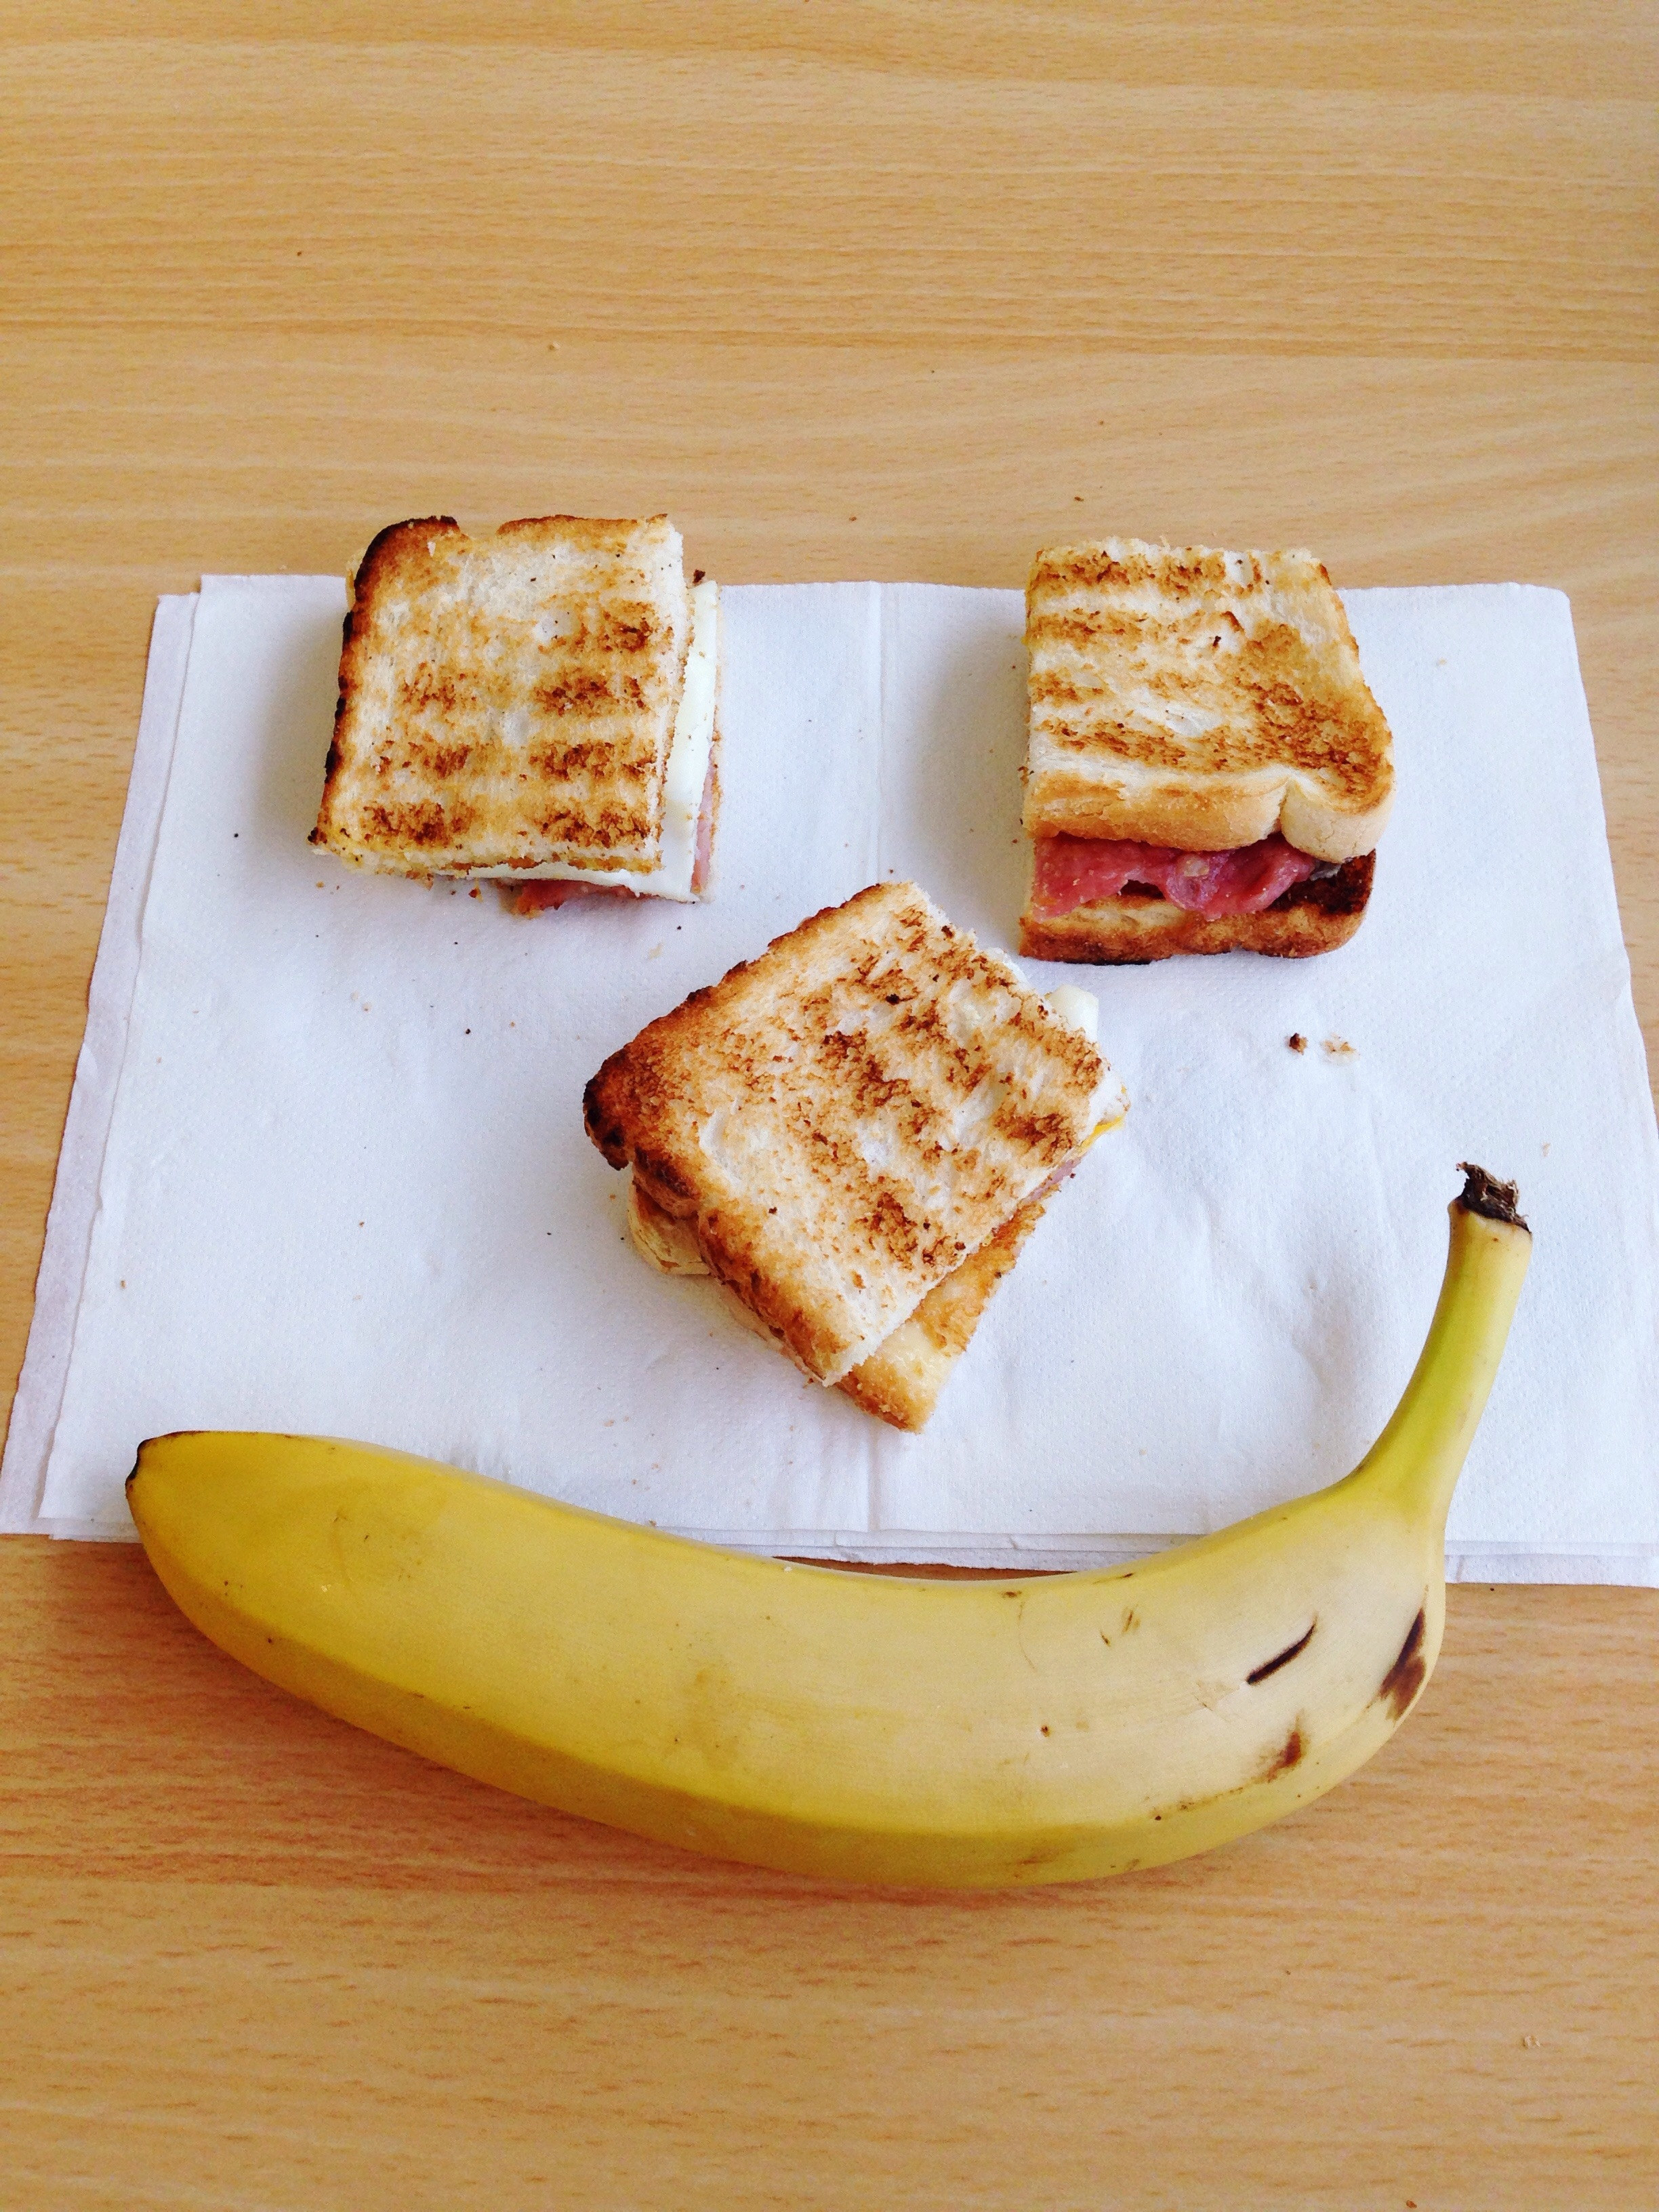 A cut toasted sandwich and a banana